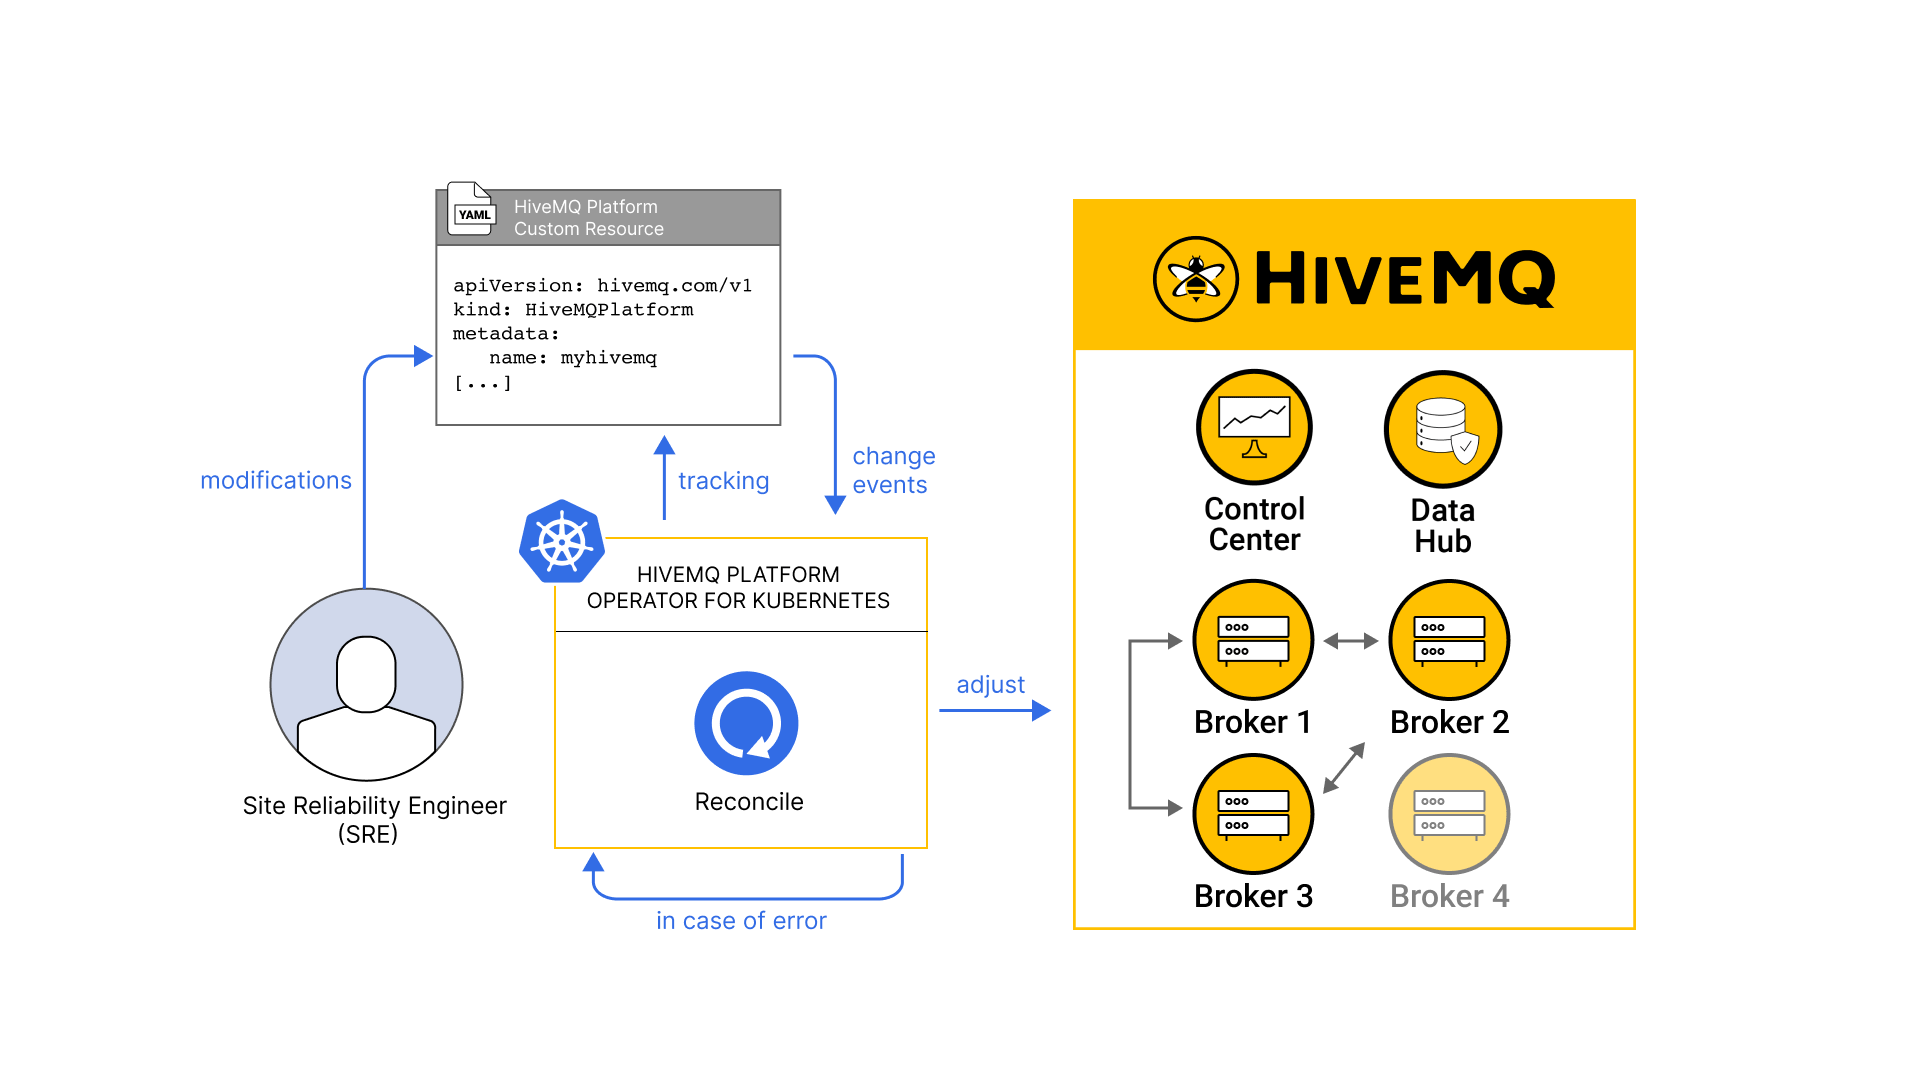 The HiveMQ Platform Operator reconciles the HiveMQ custom resource definition with the running HiveMQ Platform